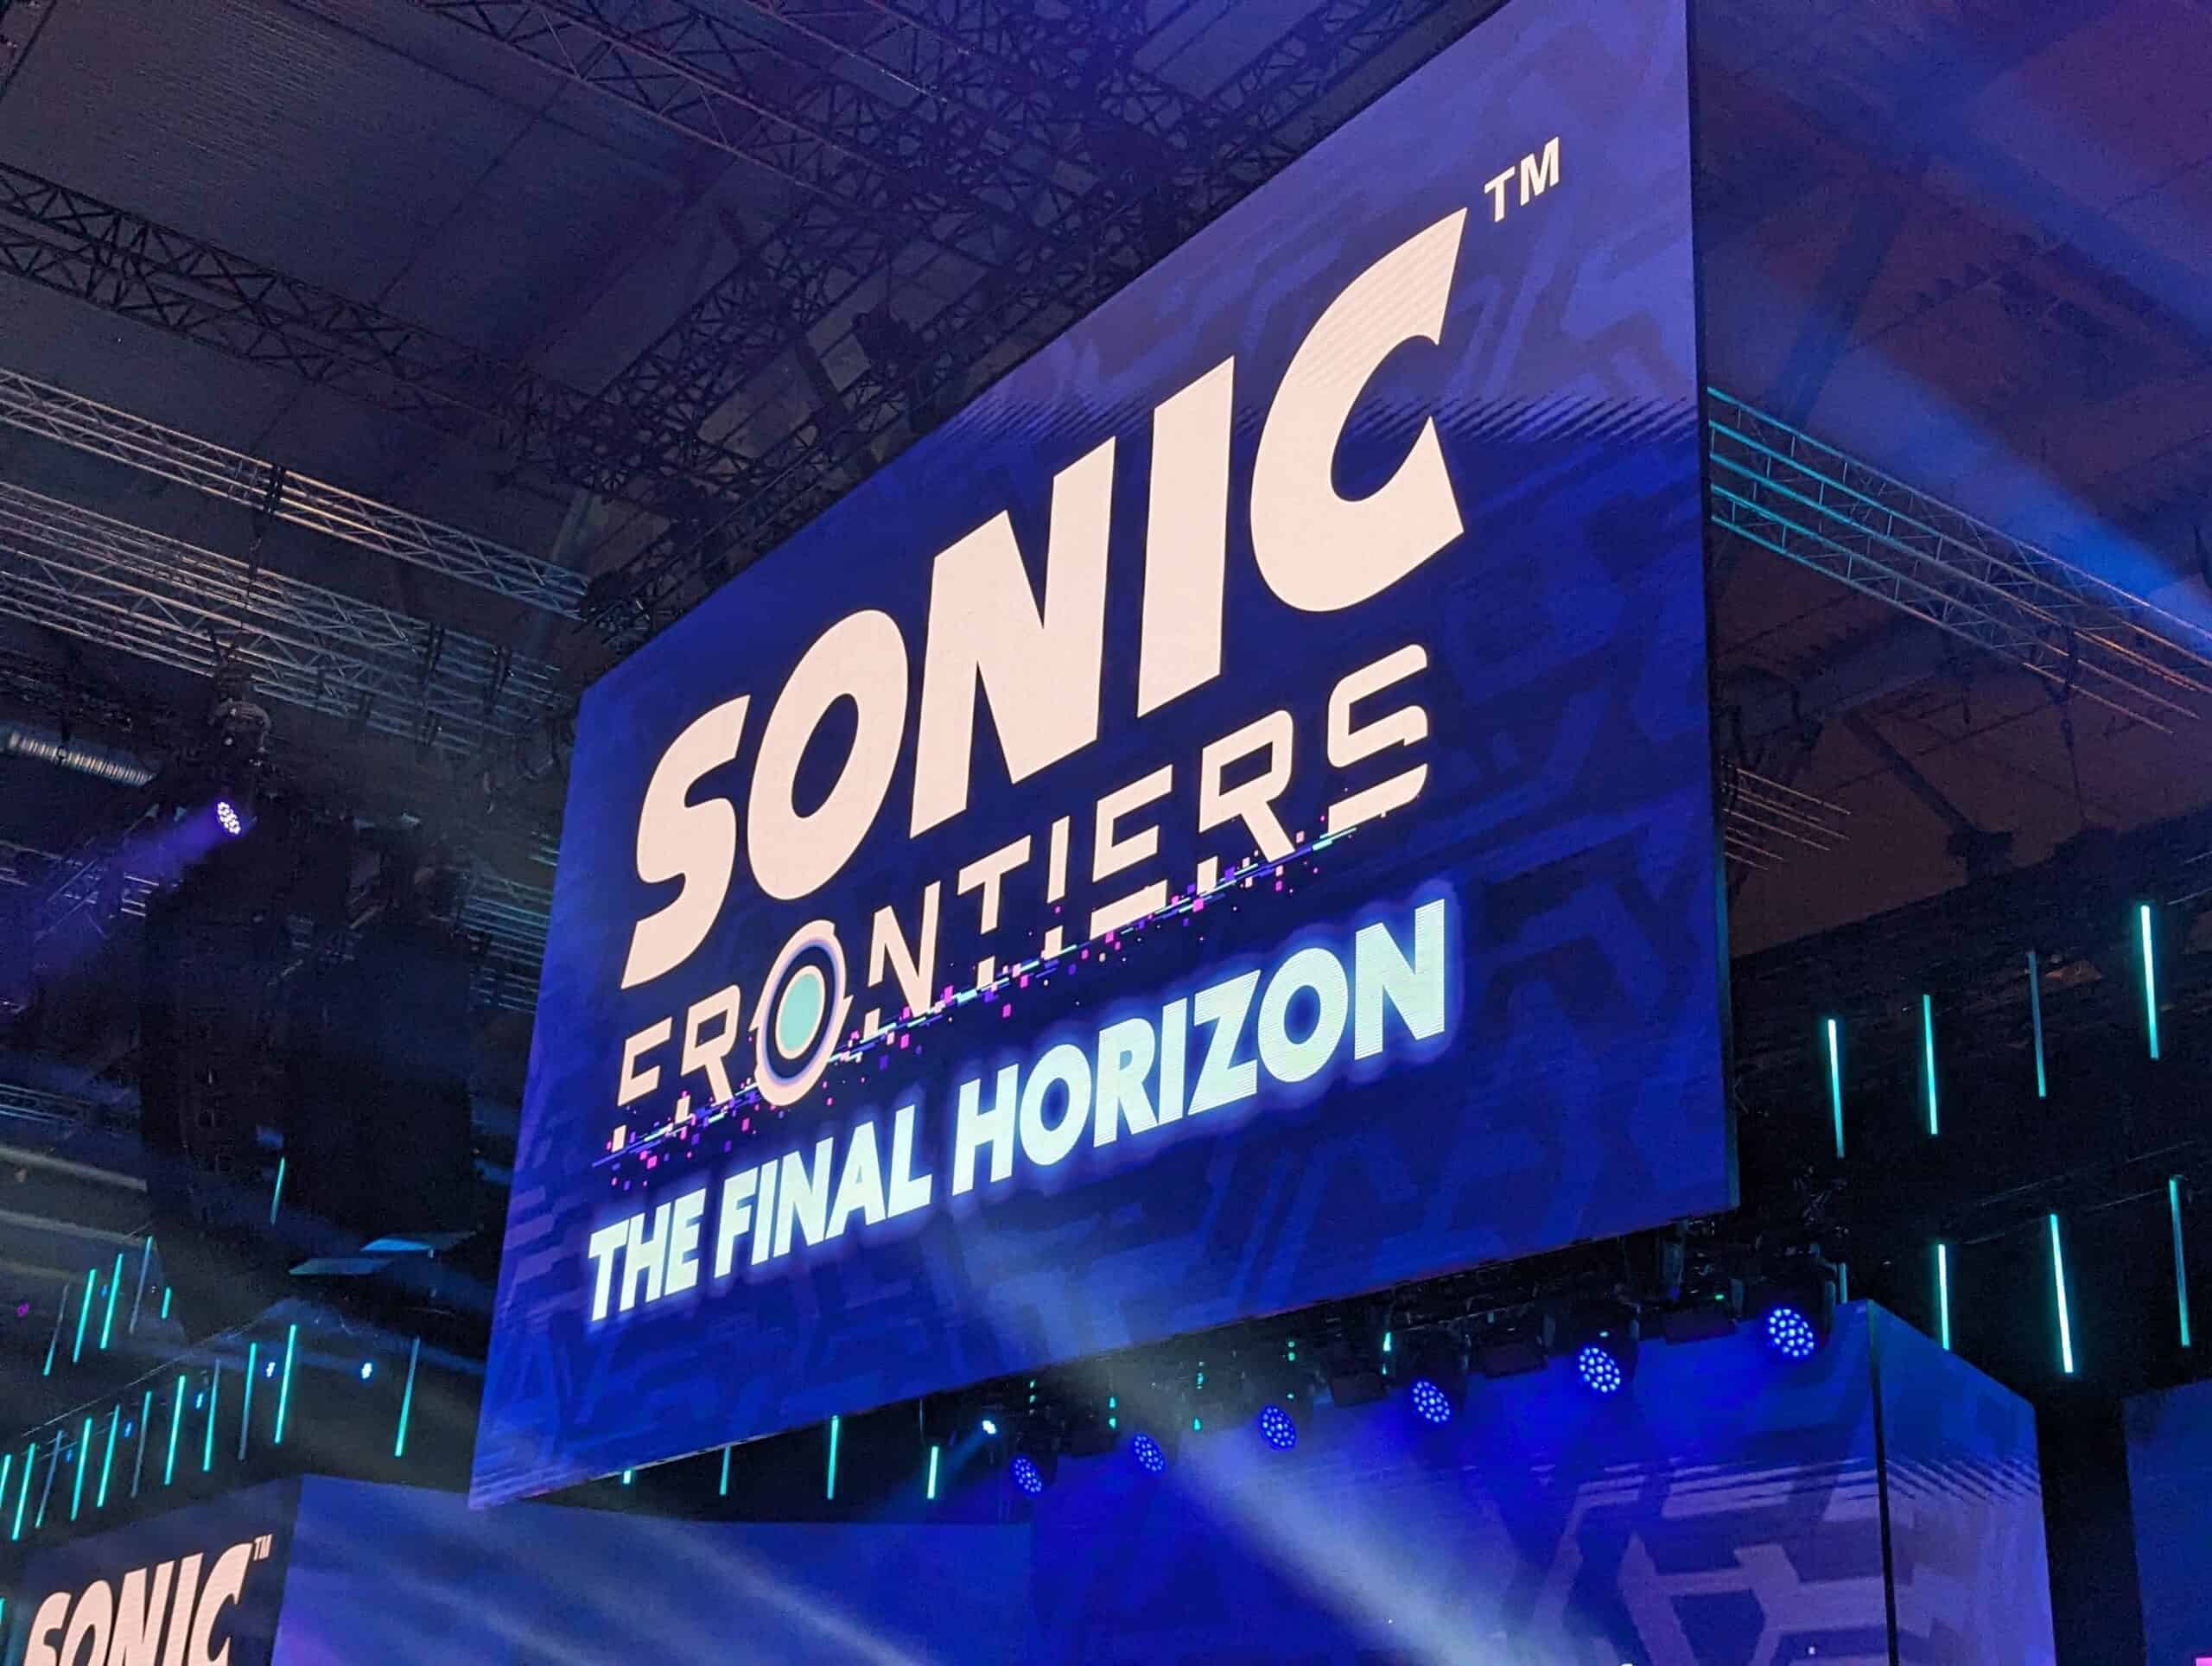 Sonic frontiers the final horizon.